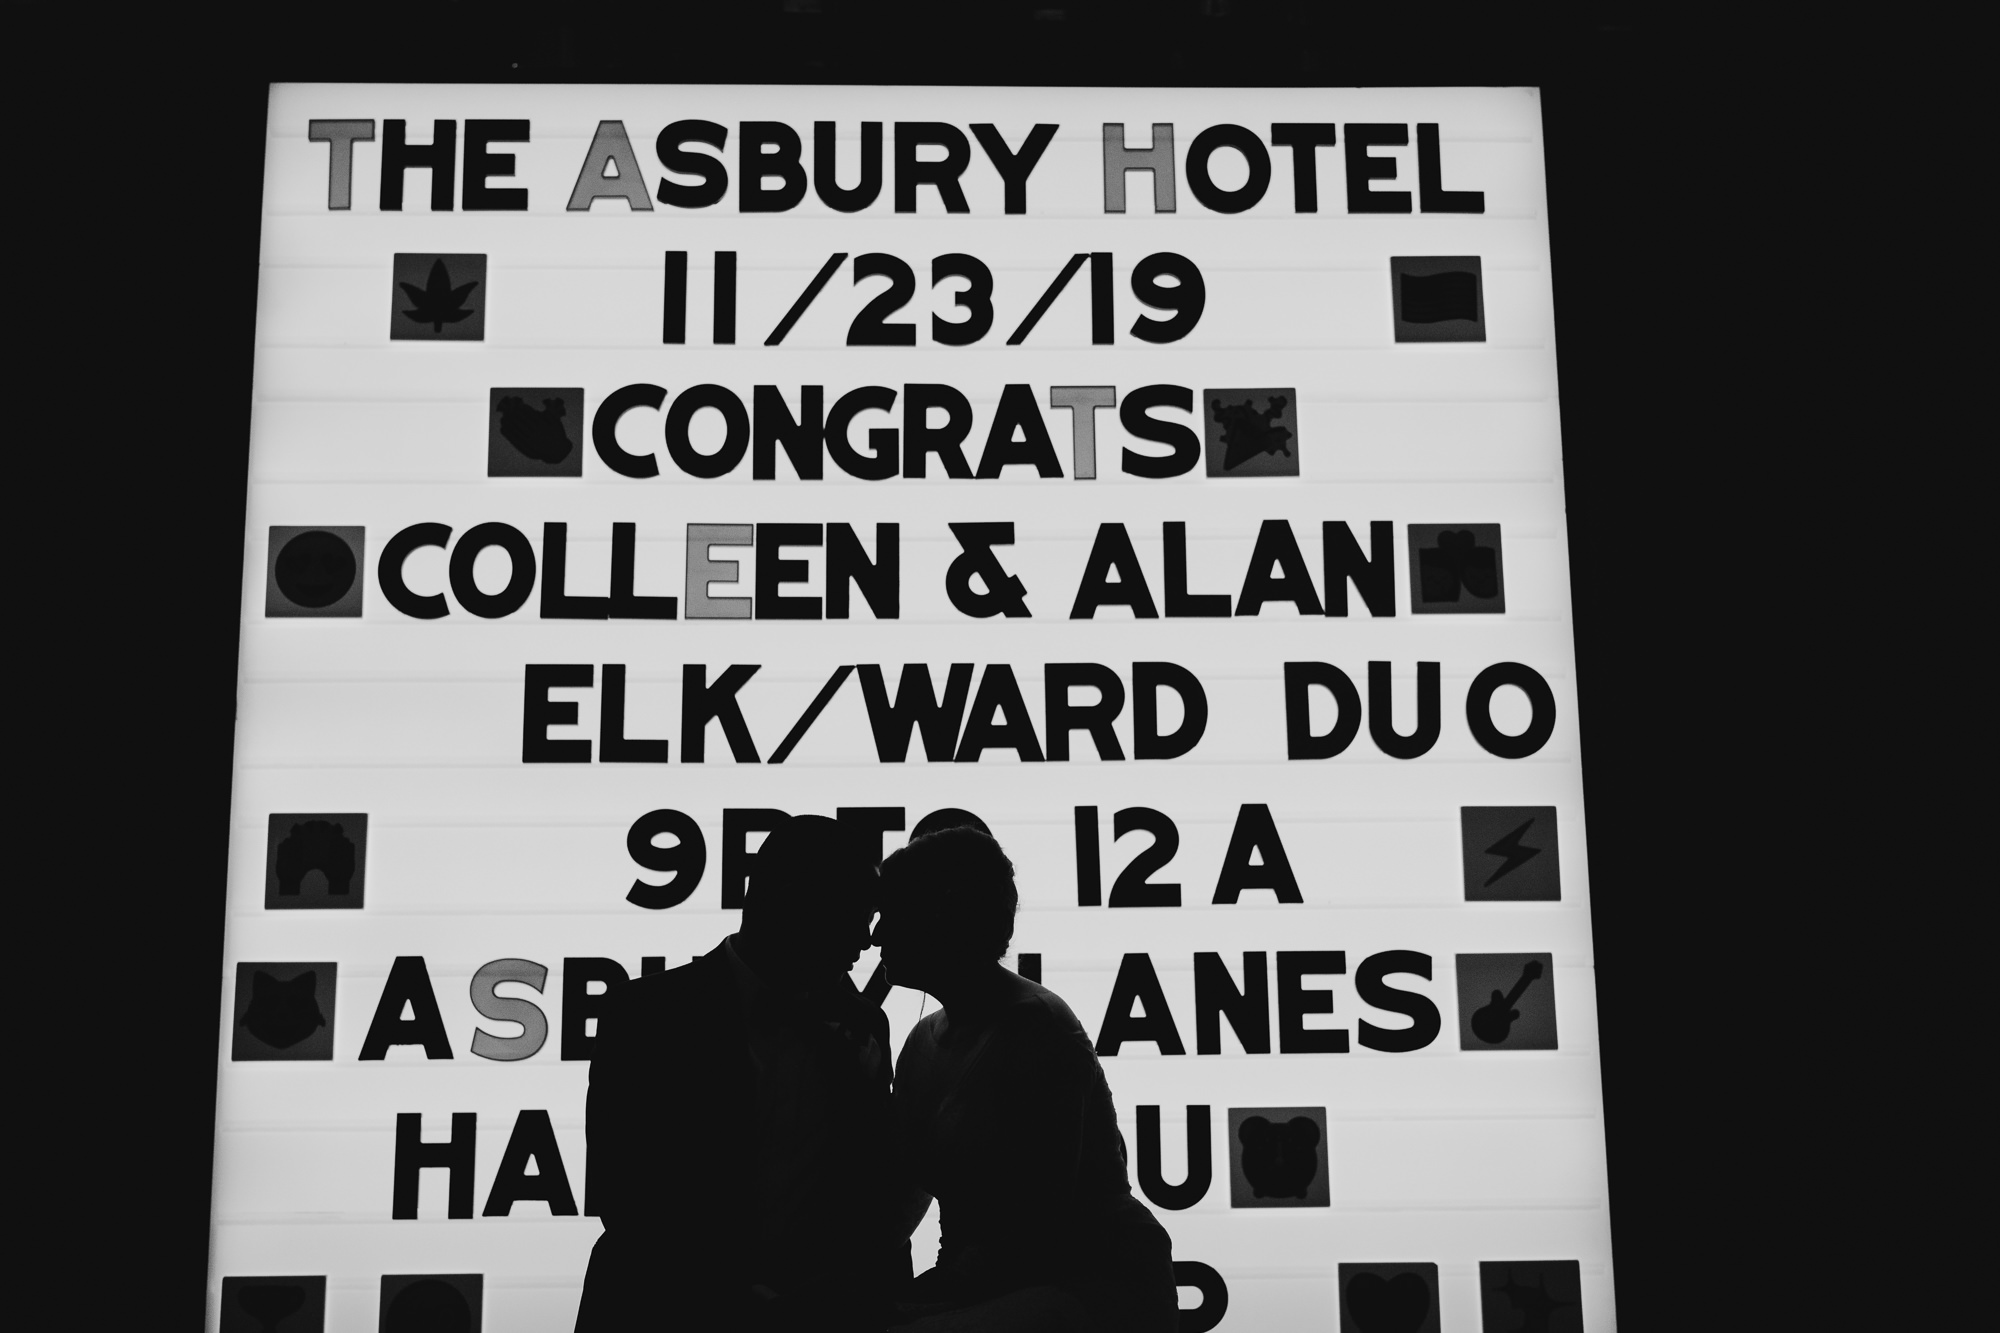 asbury hotel wedding photos, asbury hotel wedding